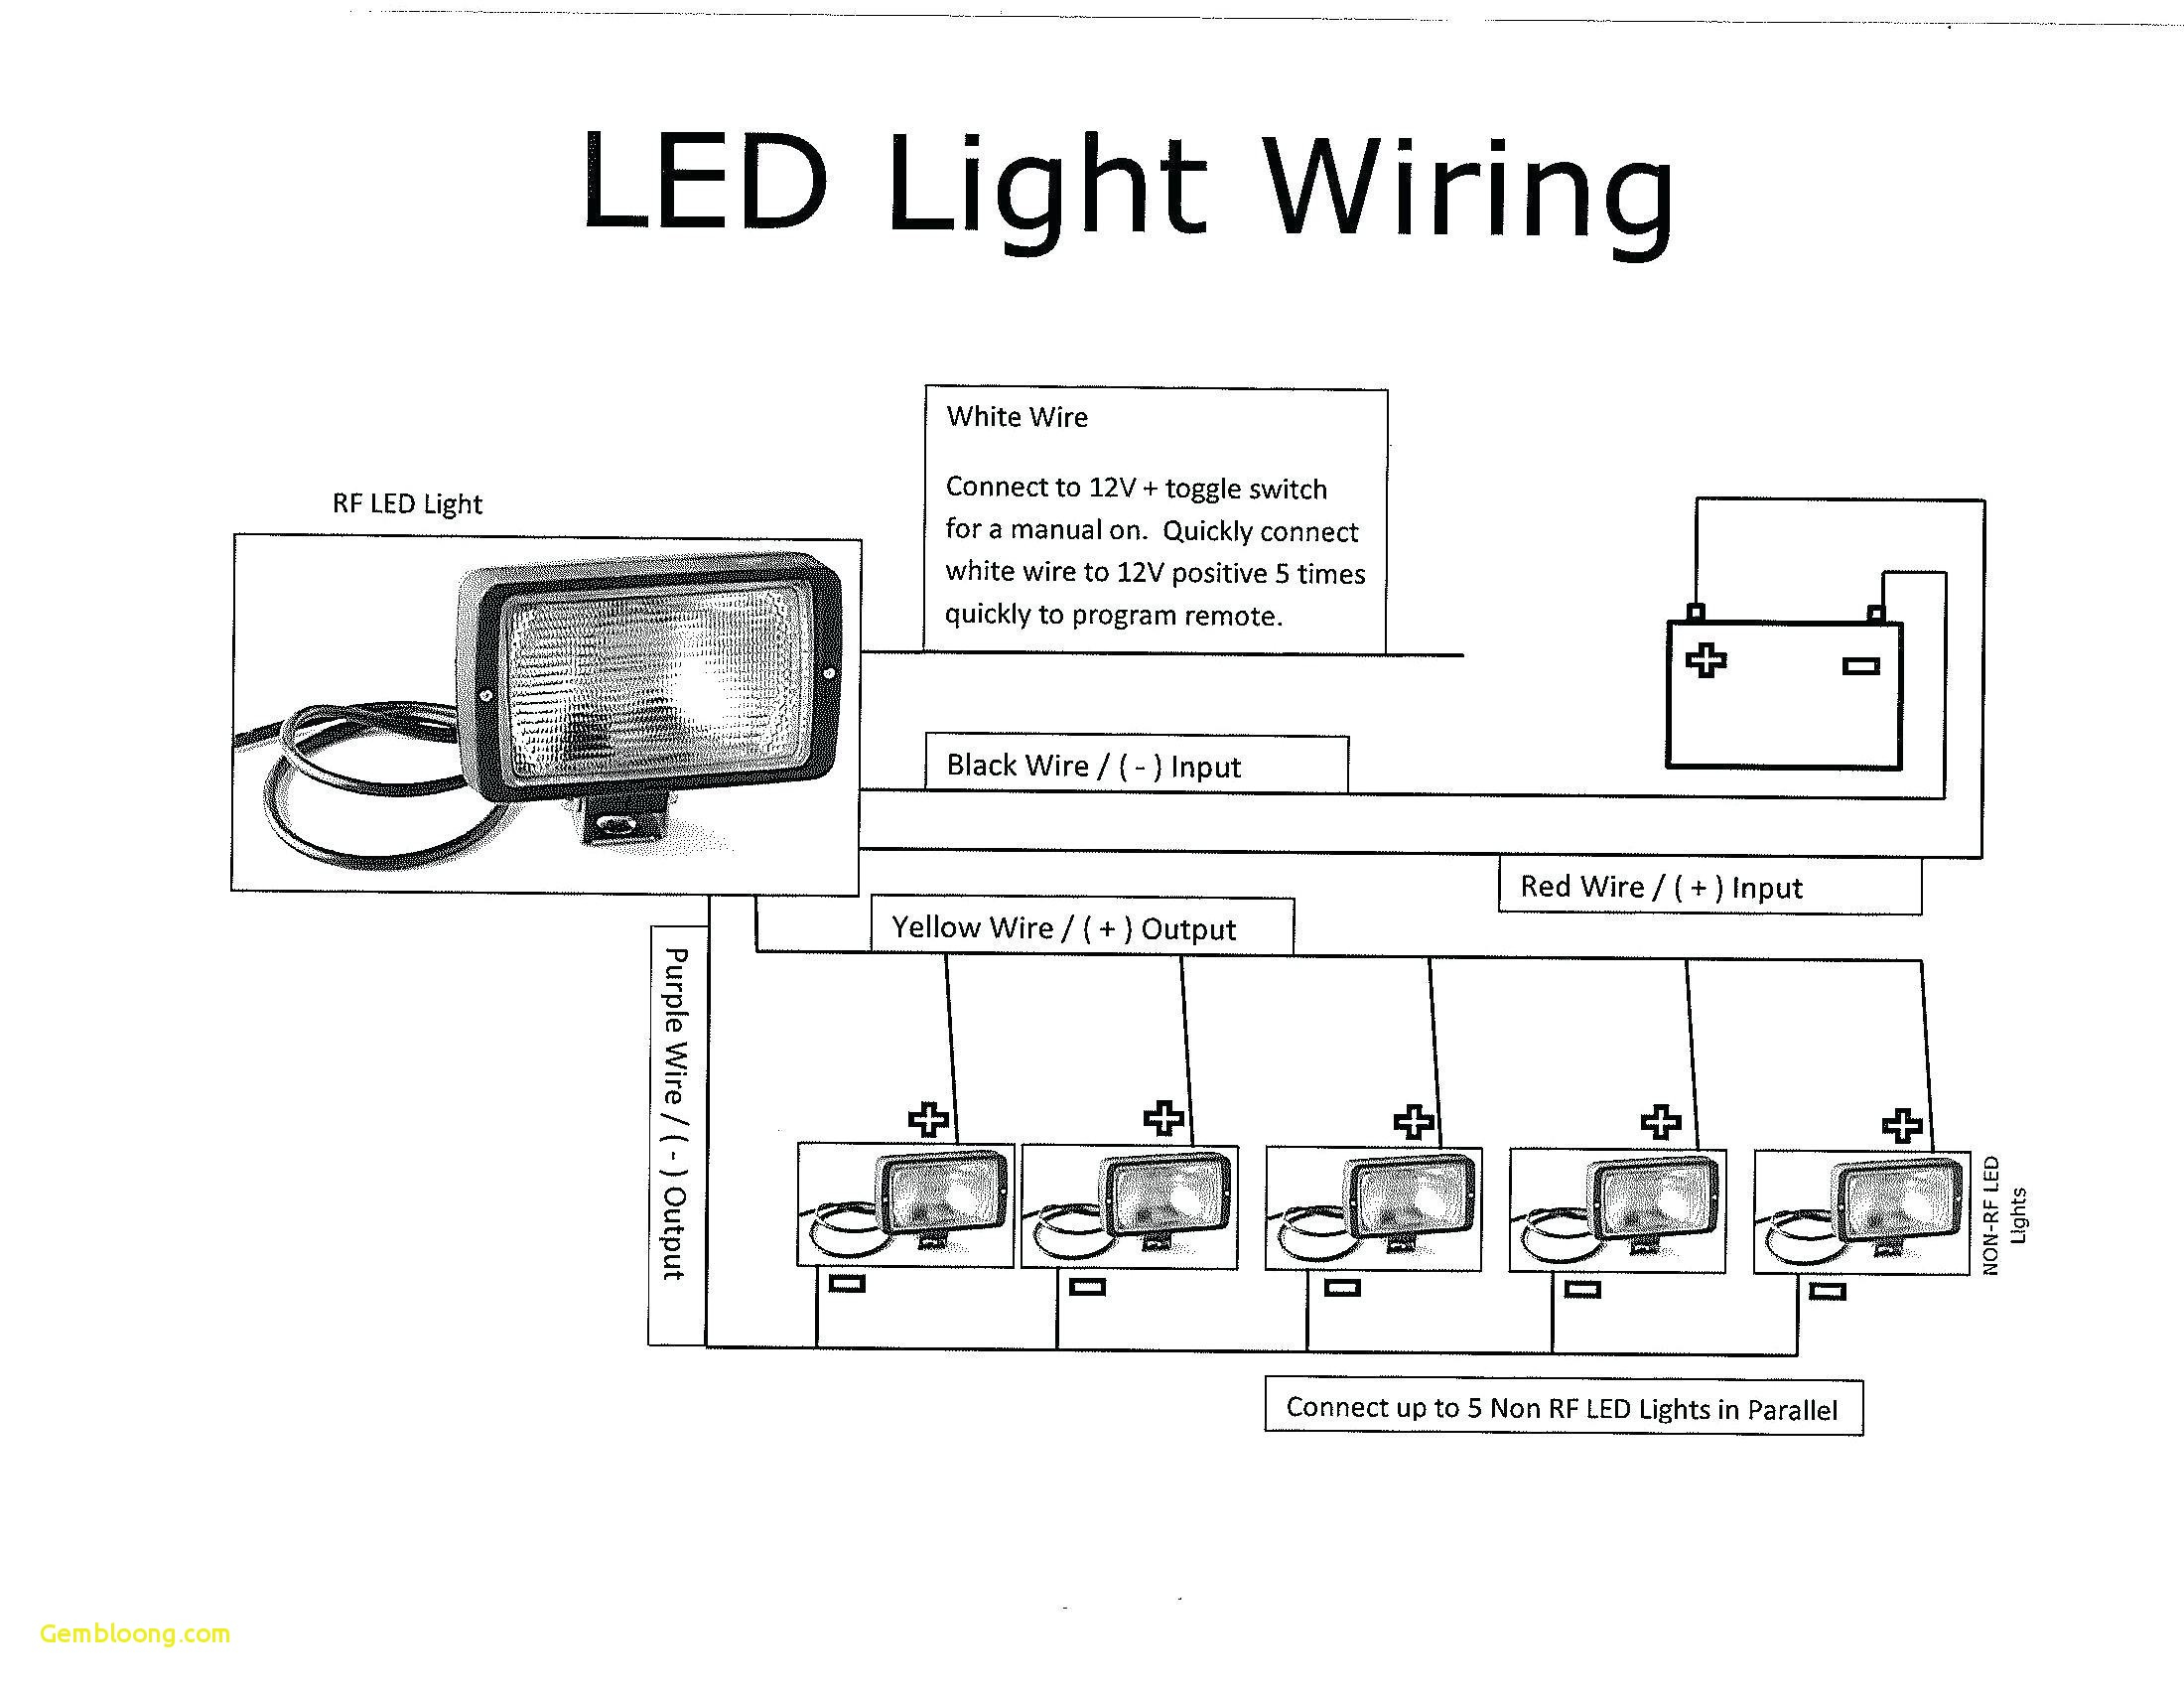 Wiring Diagram Of Led Recessed Lighting | Wiring Library - Recessed Lighting Wiring Diagram